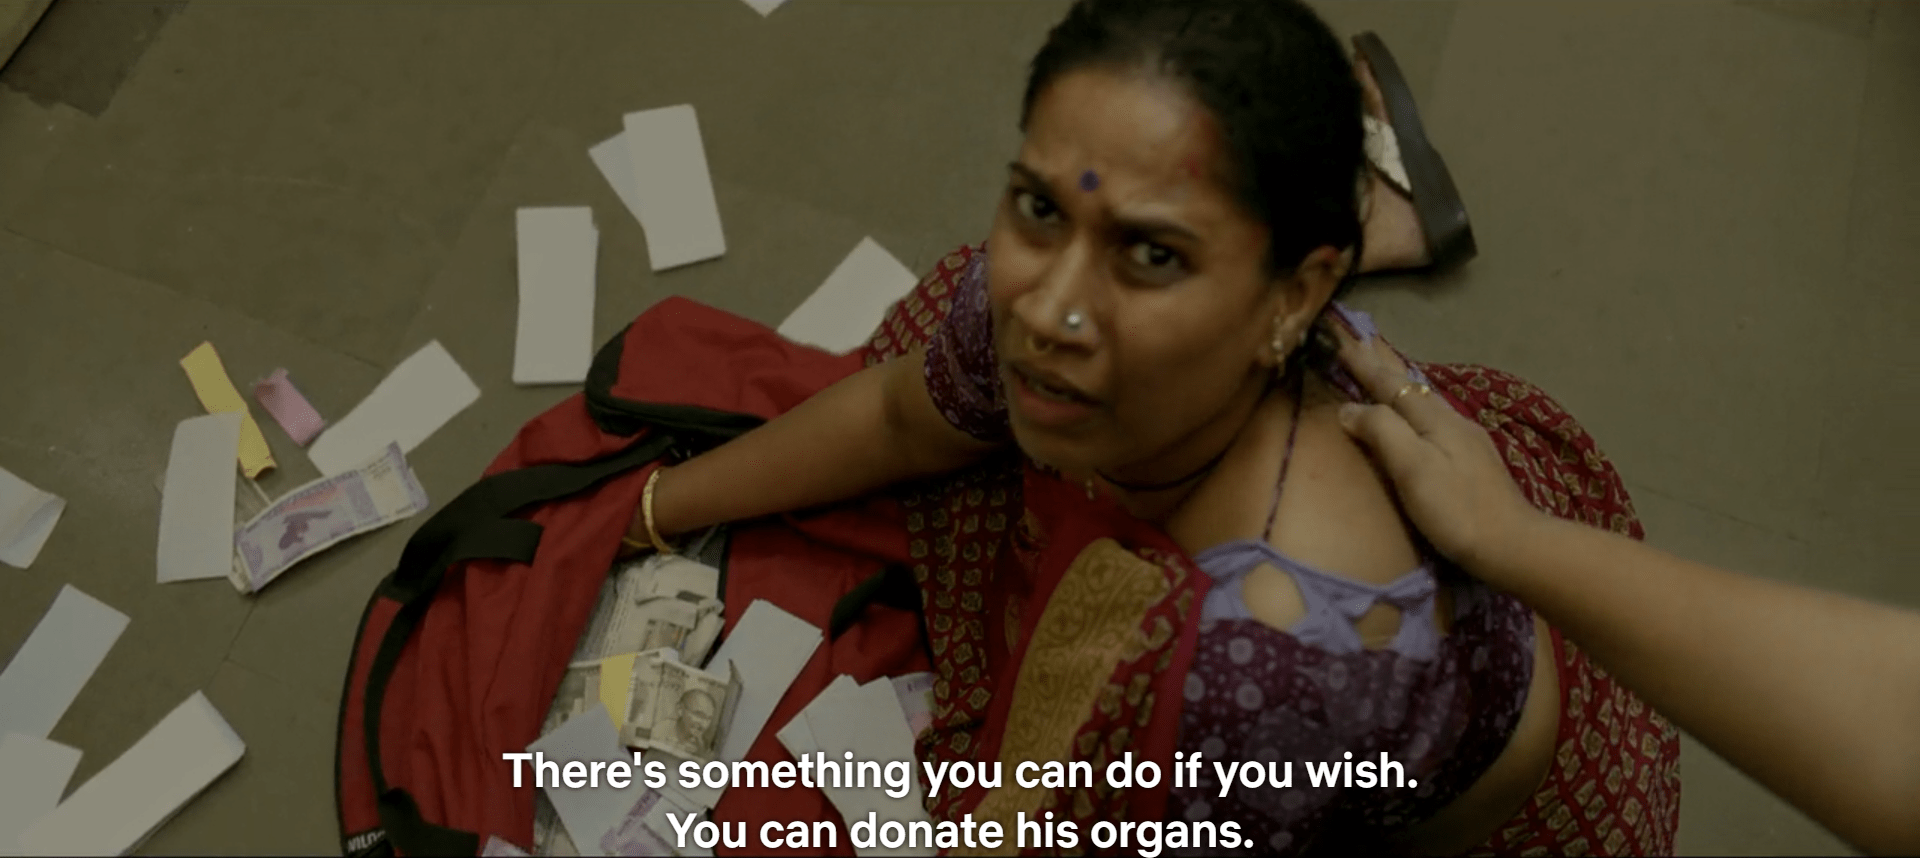 Andhadhun (2018) Murali's Death And Organ Donation